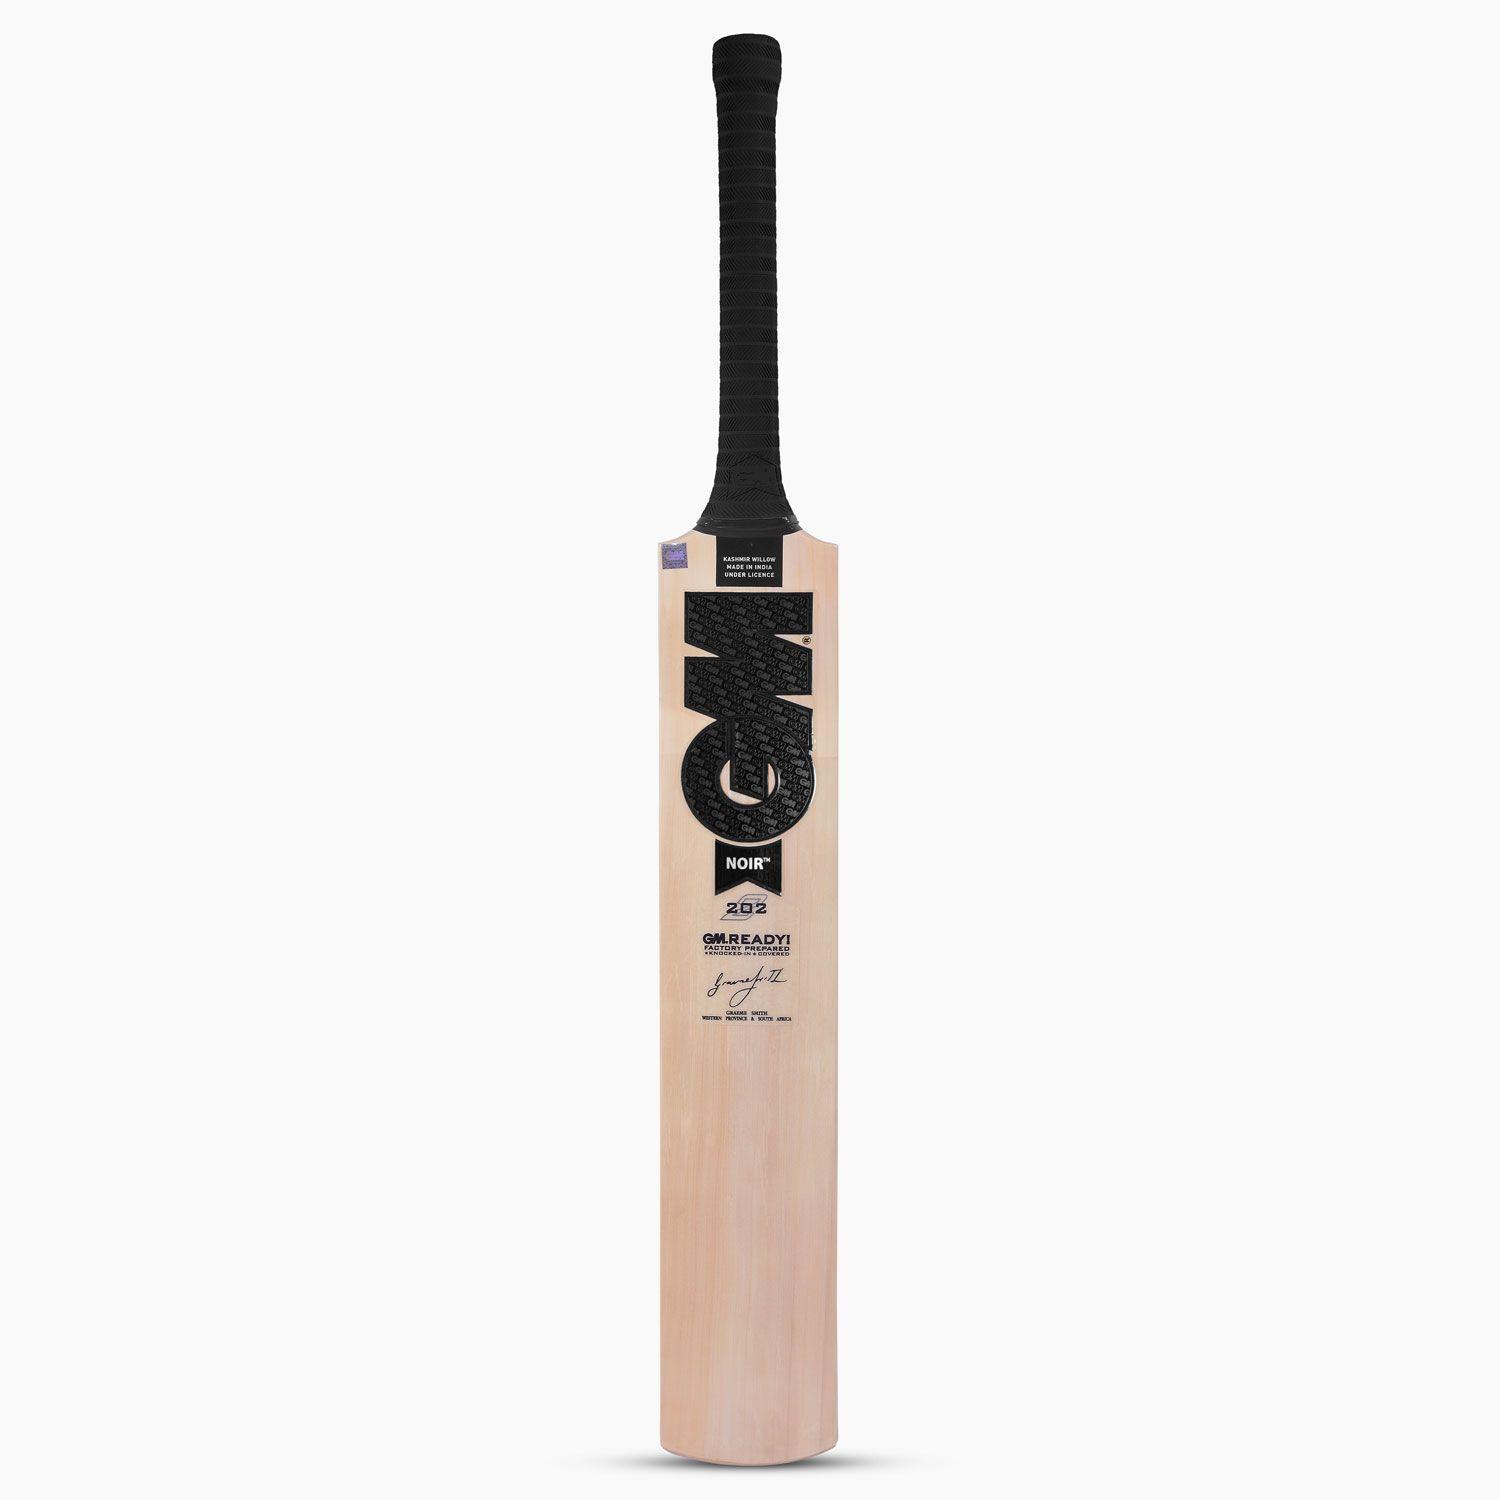 Top 10 Best cricket bats in India - GM Noir 202 Kashmir